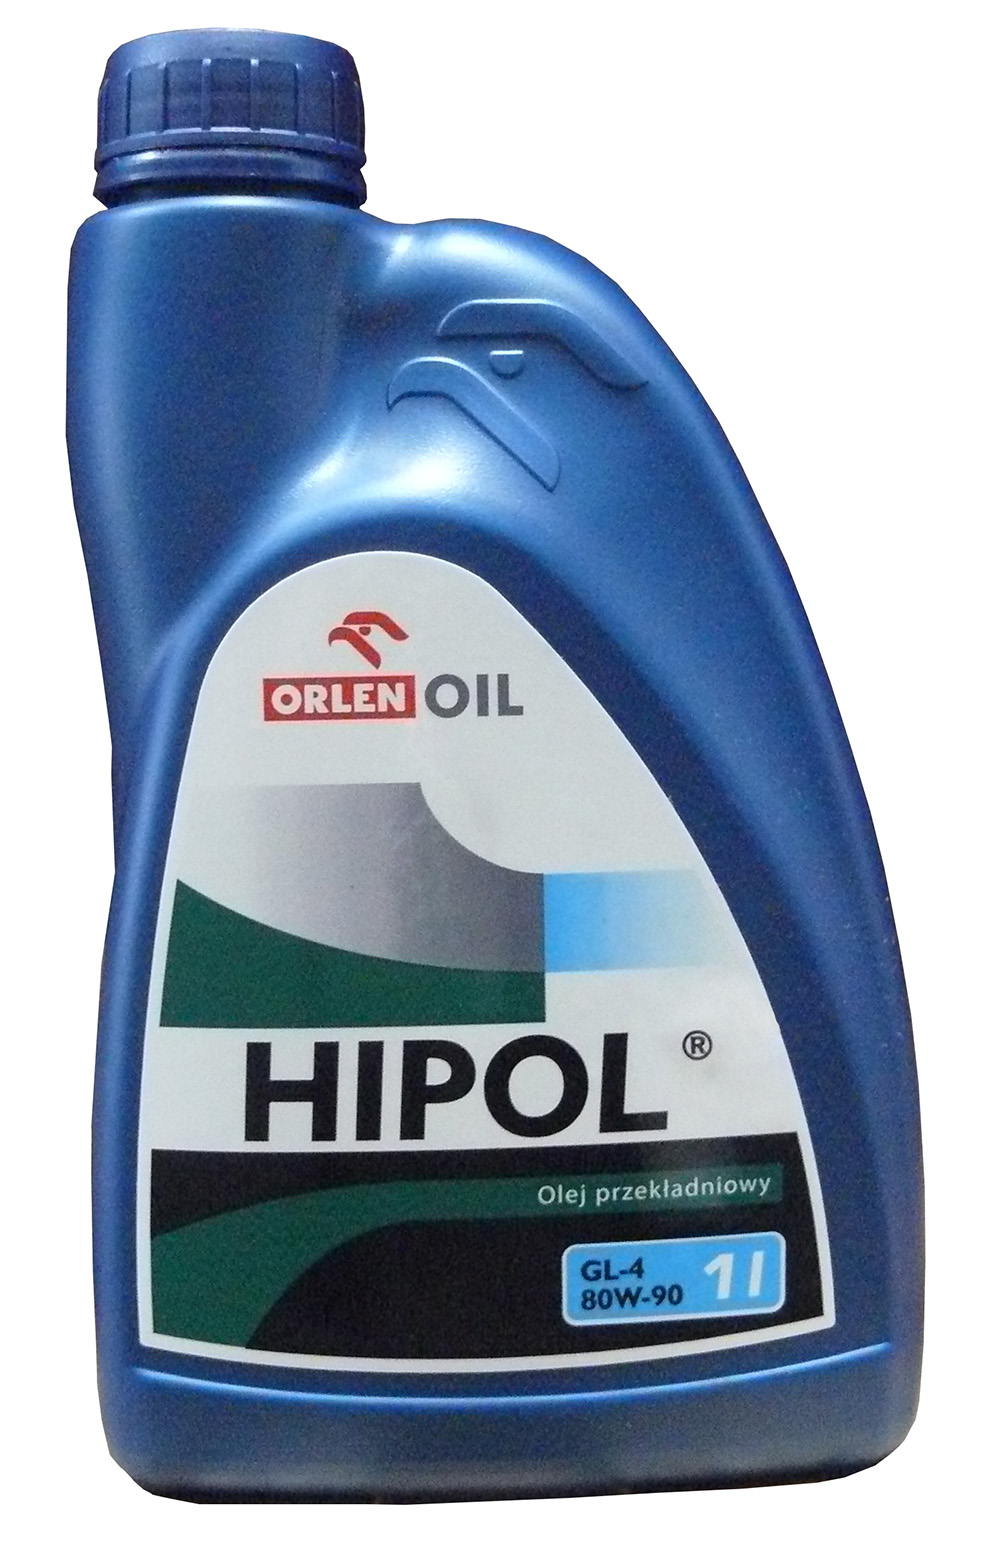 Hipol Orlen Oil 85w-140. Hipol Orlen Oil 85w-40. 70660e18eu масло 1л. 40817132 Купить. Минеральное масло 80w 90